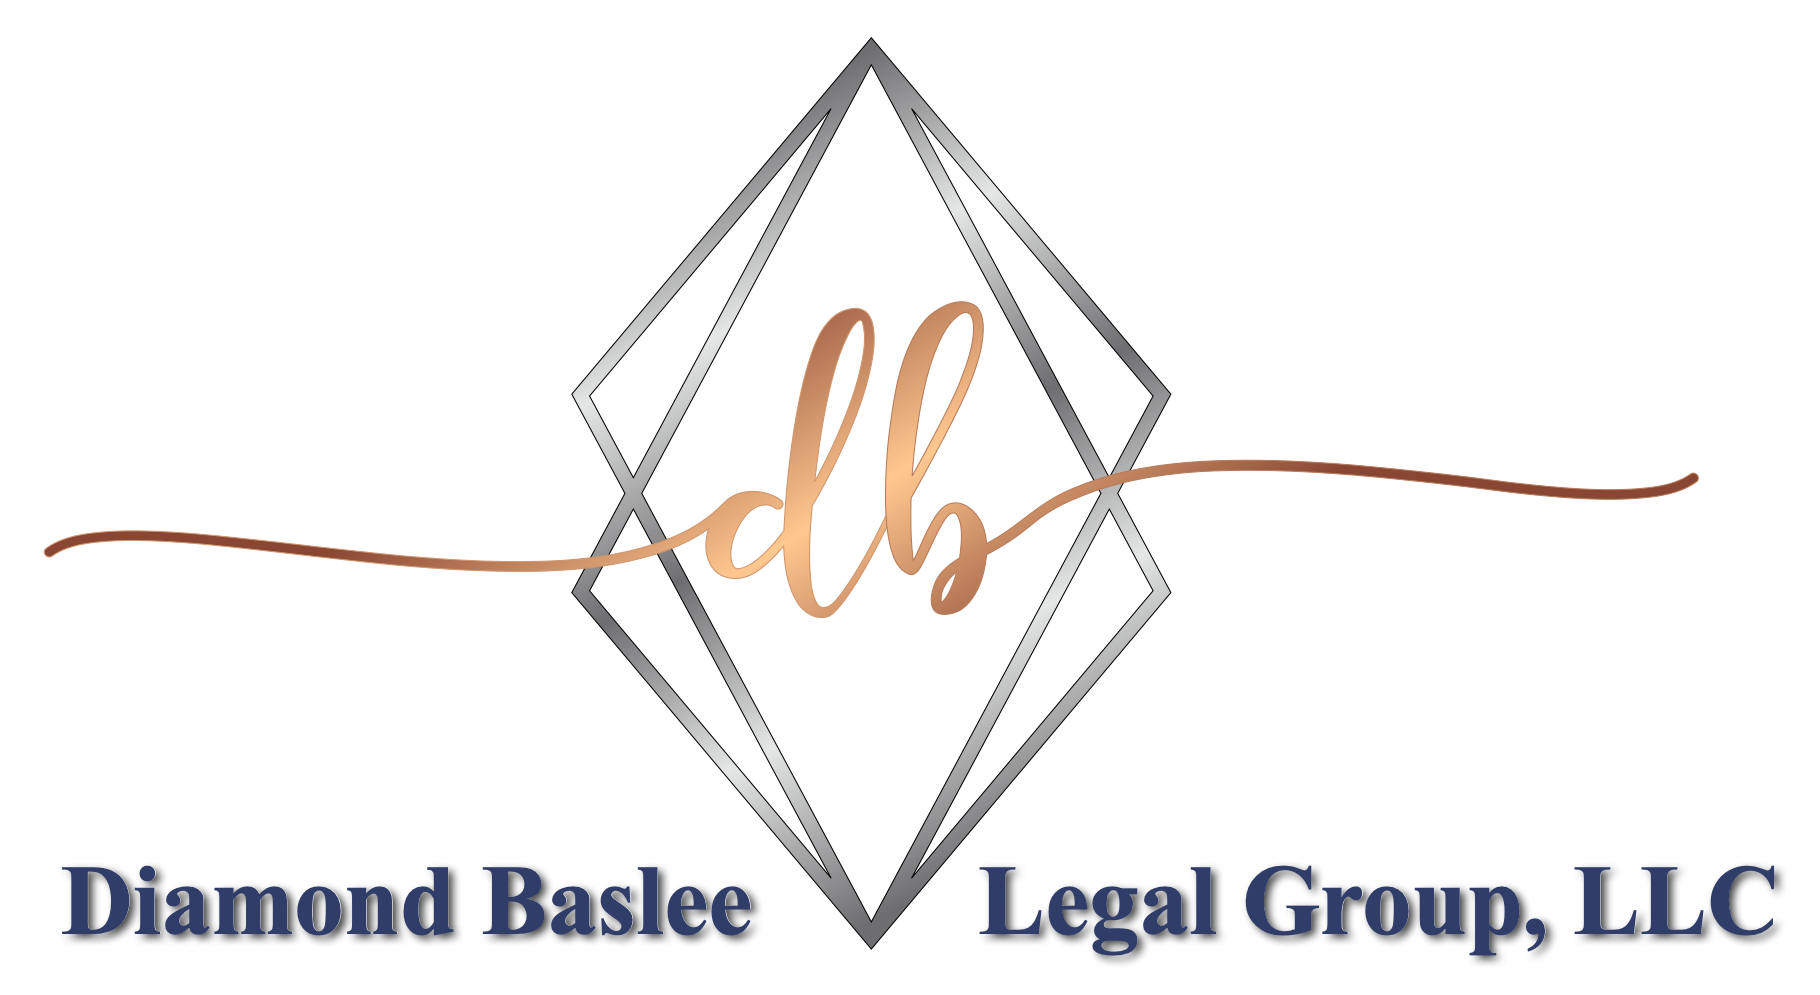 Diamond Baslee Legal Group